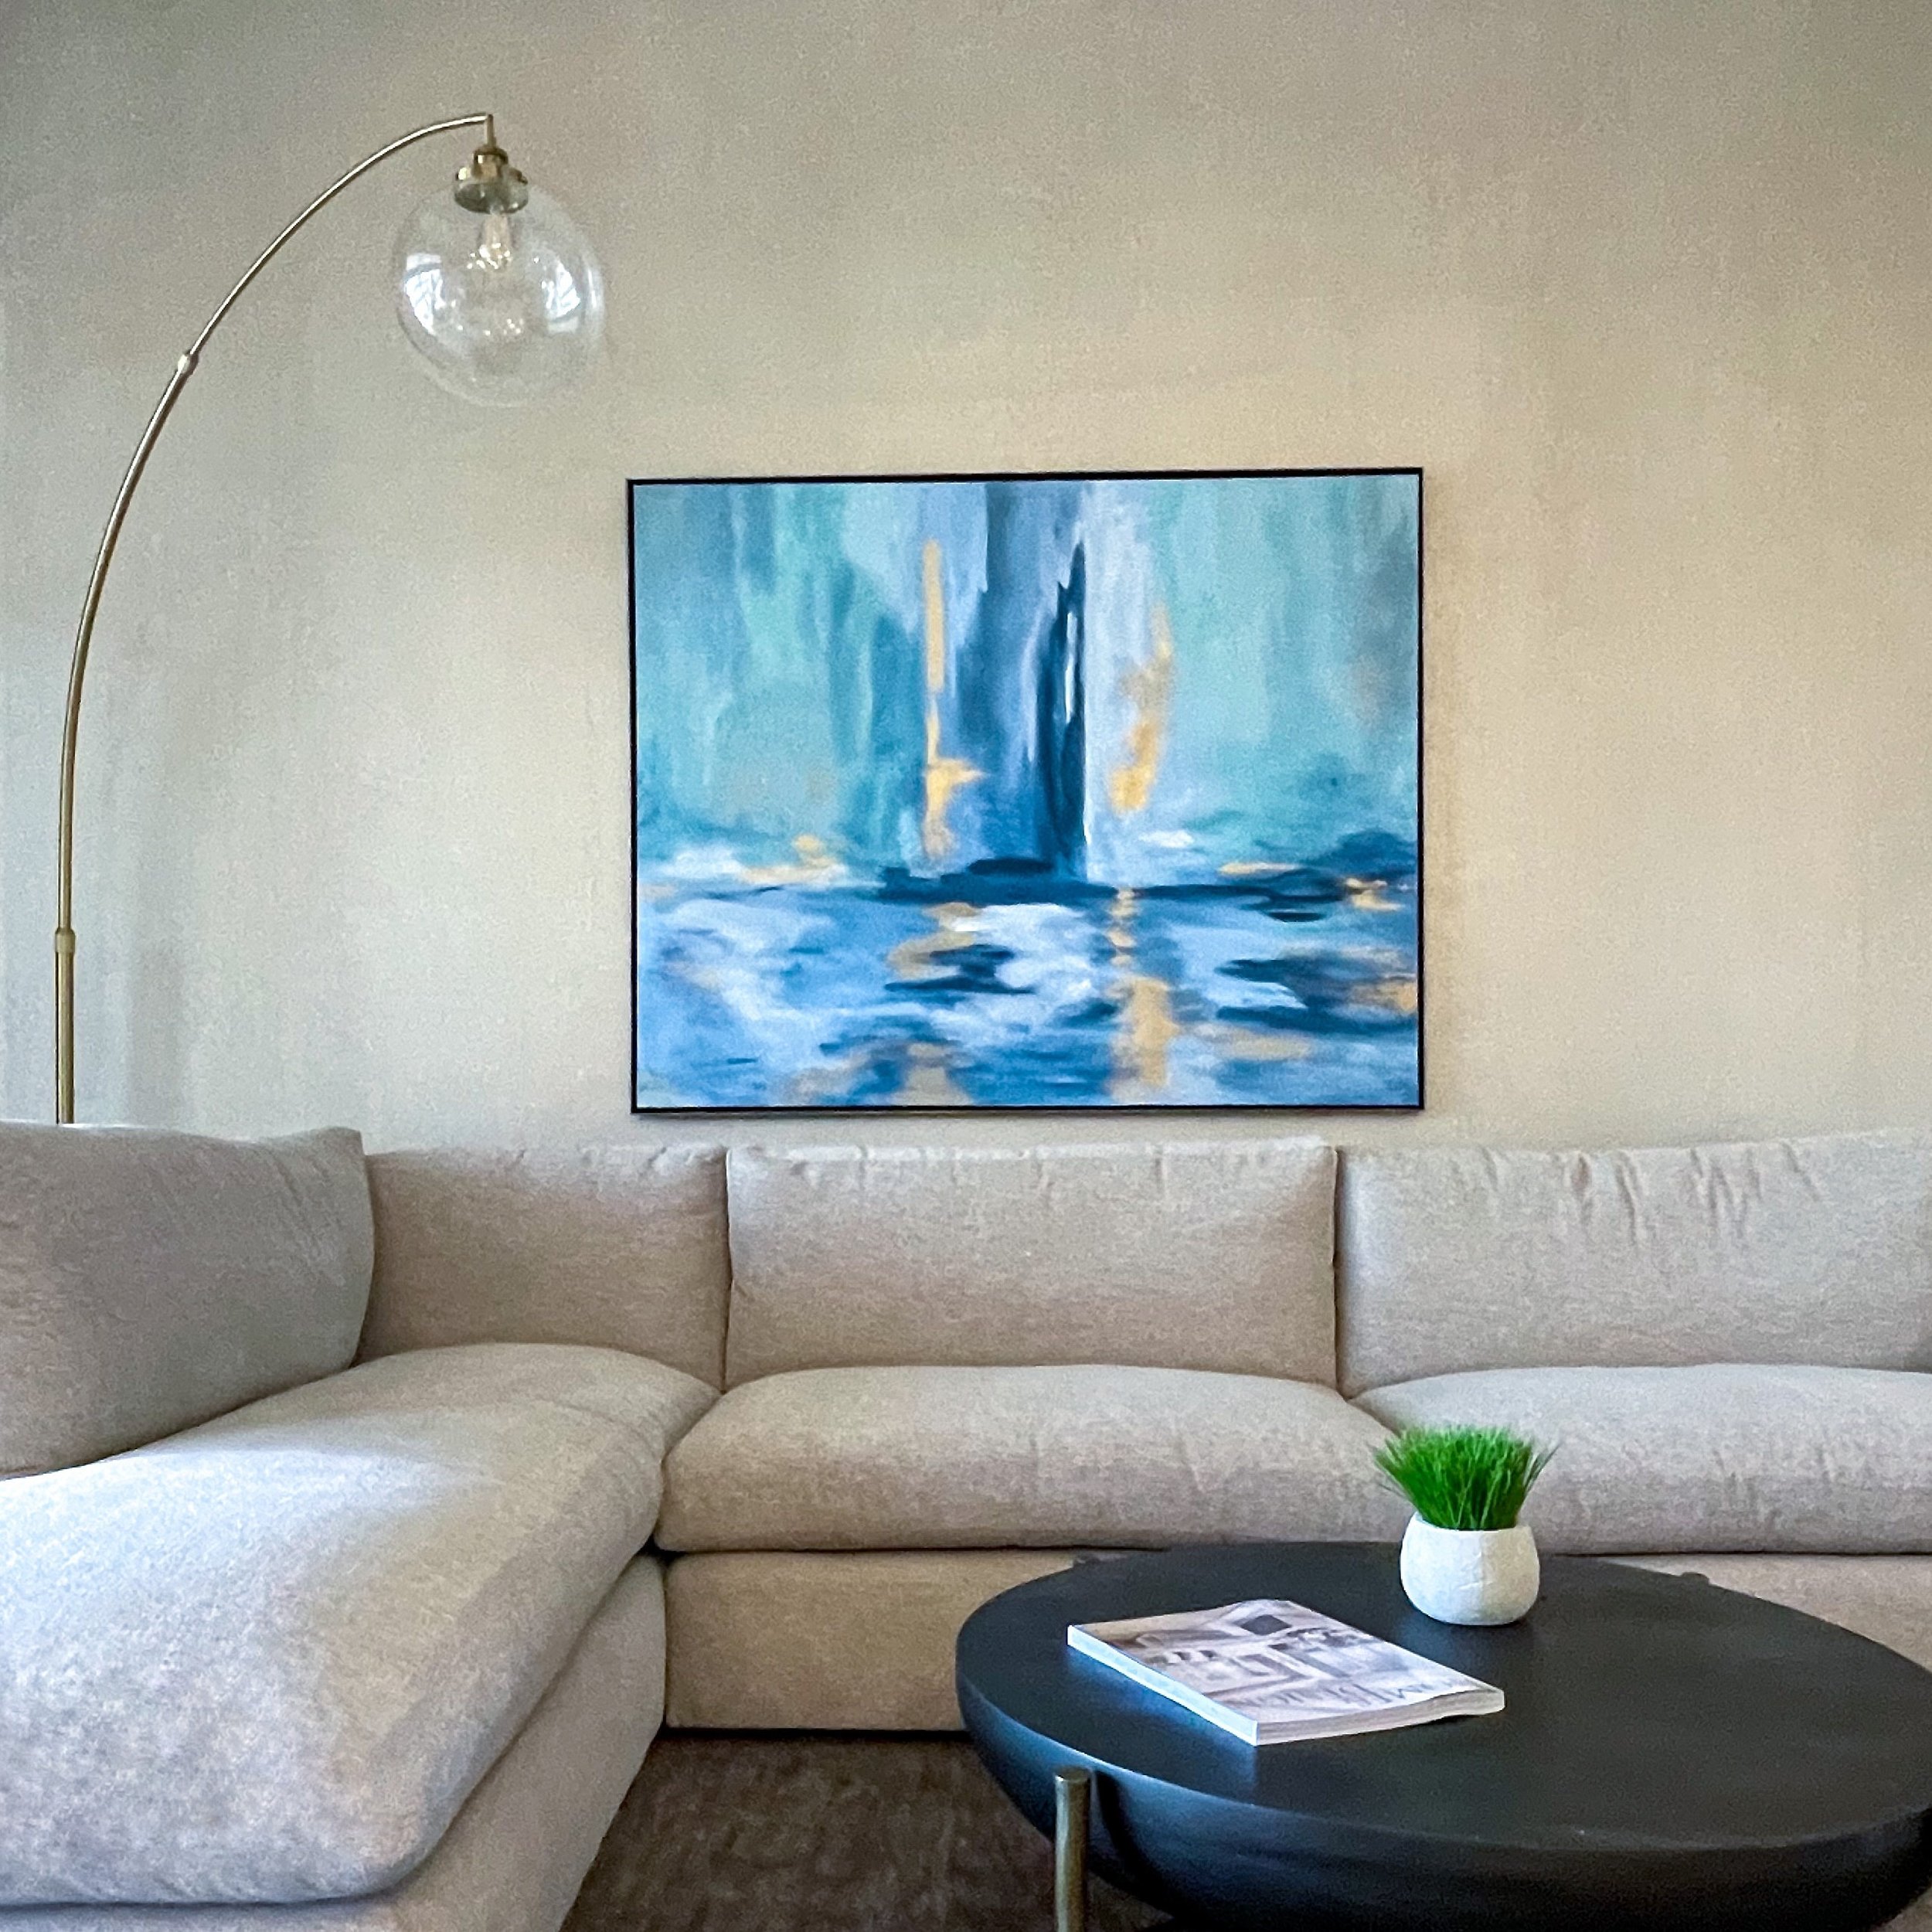 Artwork that makes a statement, we love the serenity of this painting @danell.lytell get inspired @sandraasdourianinteriors #livingroomdecor #livingroom #design #livingroomdesign #artwork #loveyourhome #designdetails #interiordesignersofinsta #naples